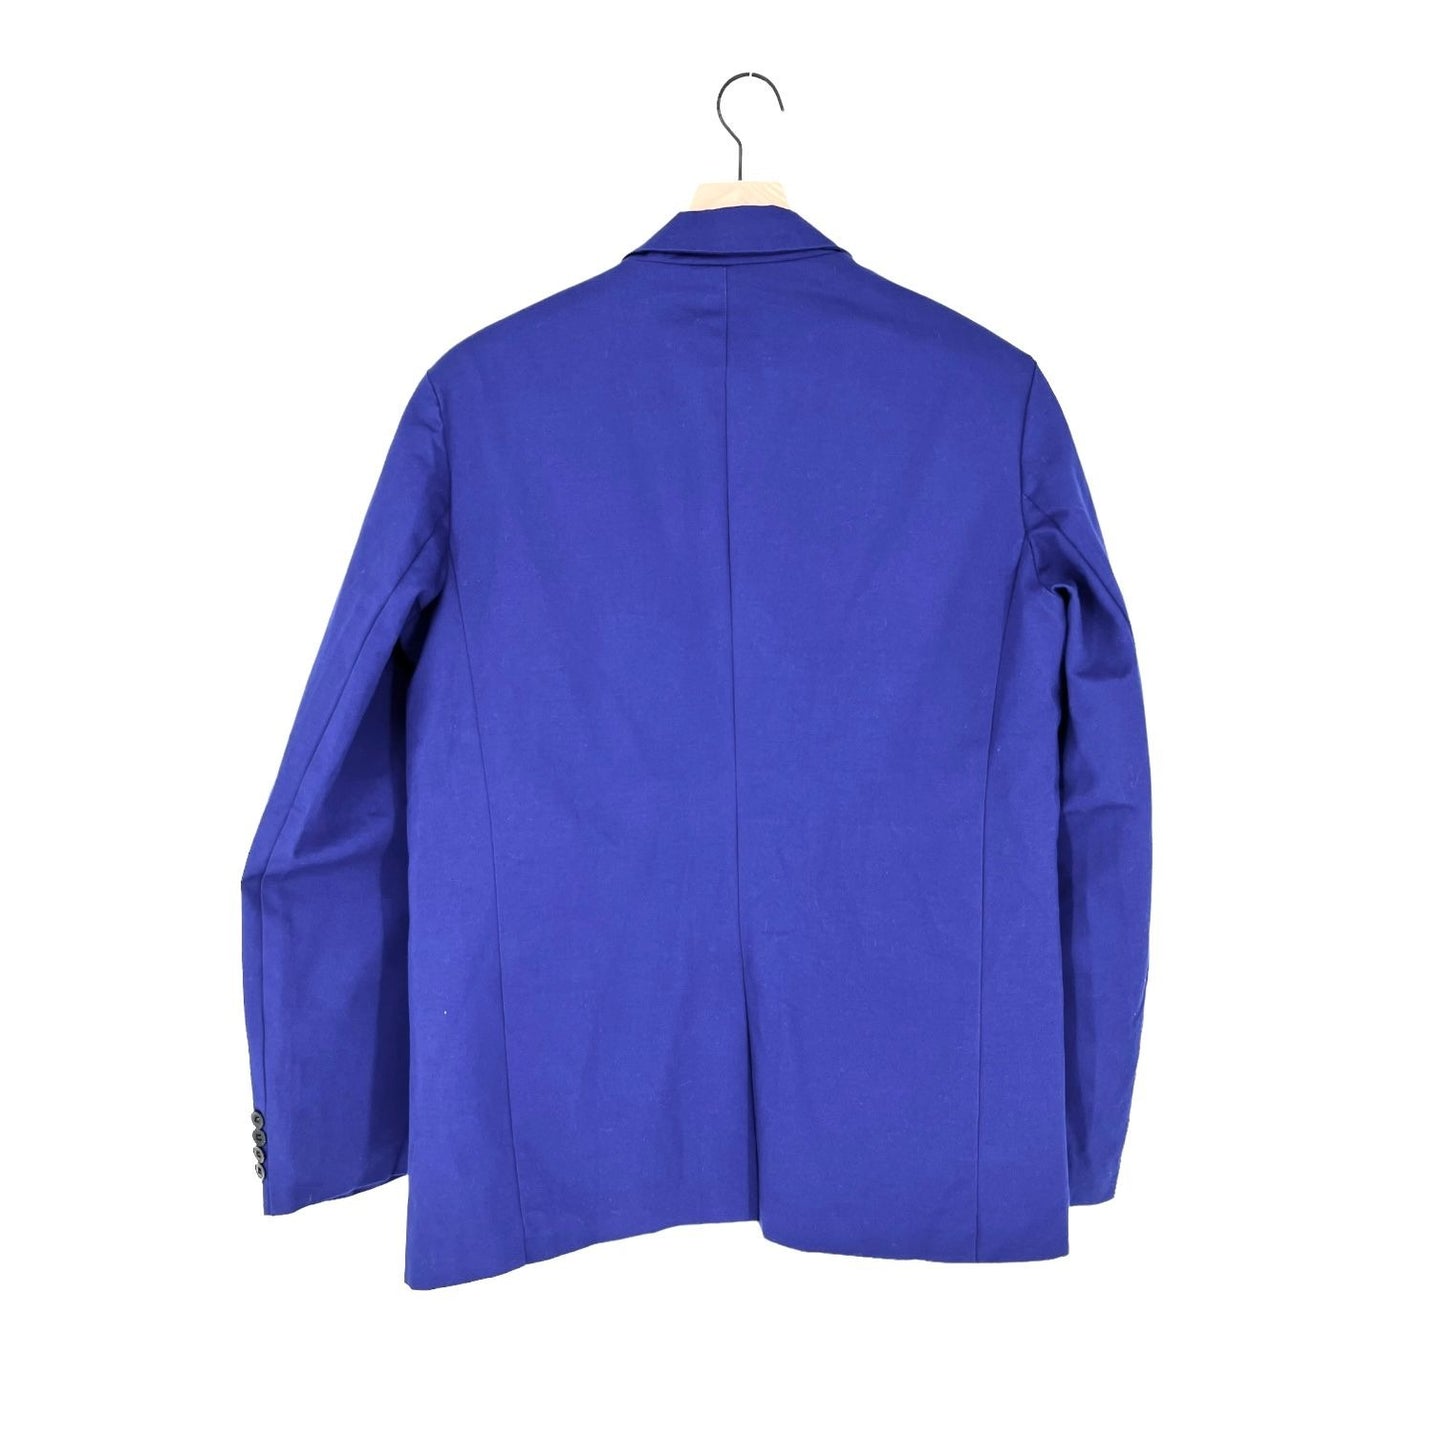 NWT Allegra K Sports Coat Blazer | 40